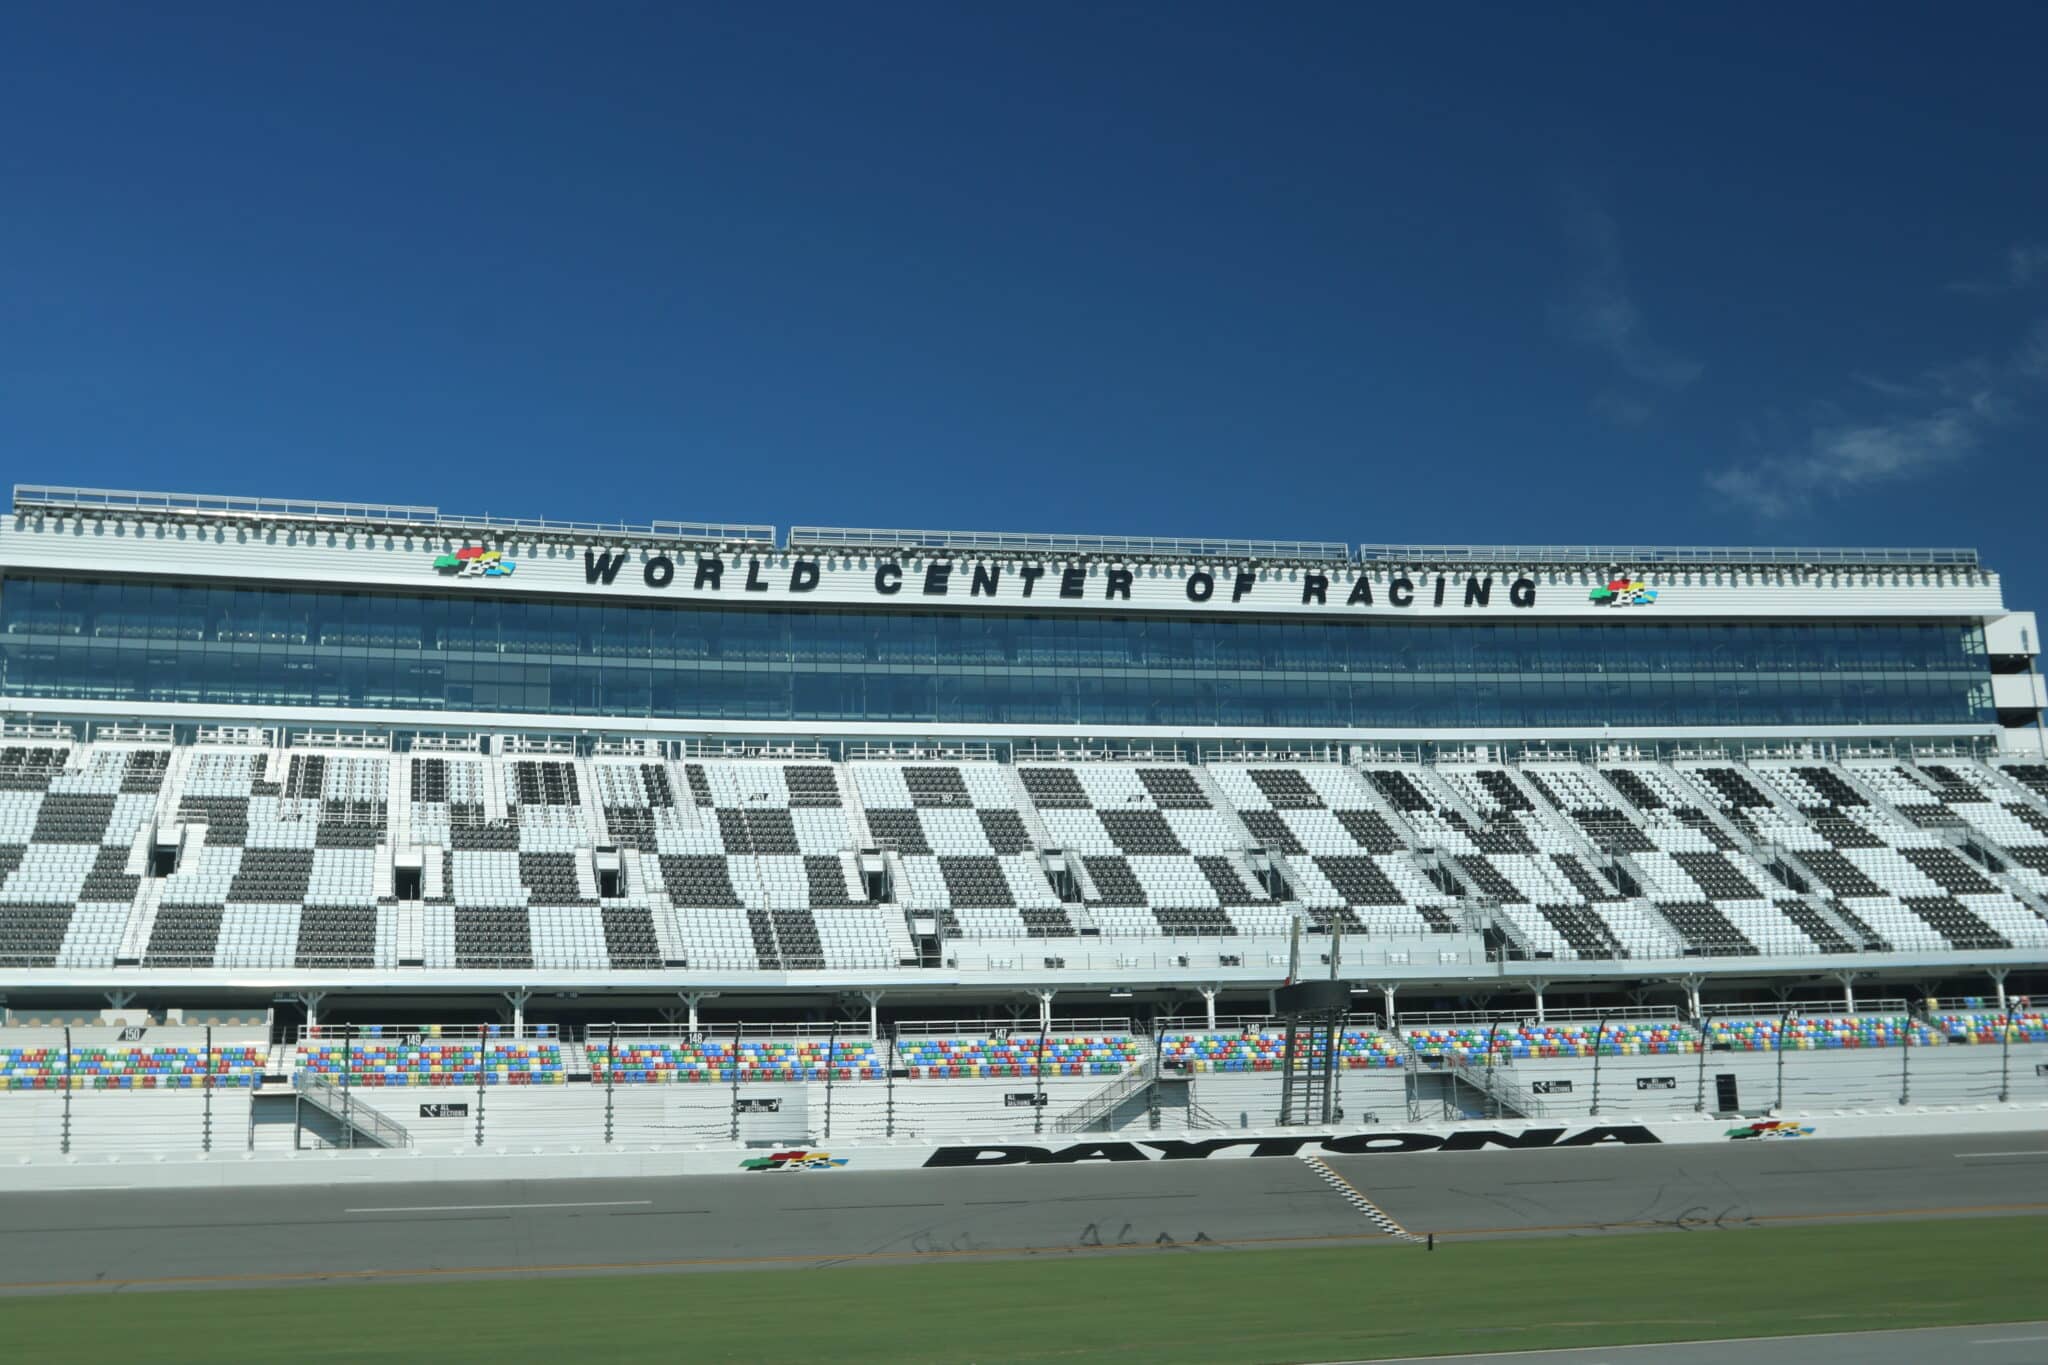 Remodeled grandstand of Daytona International Speedway (Credit: Bill Rockwell)